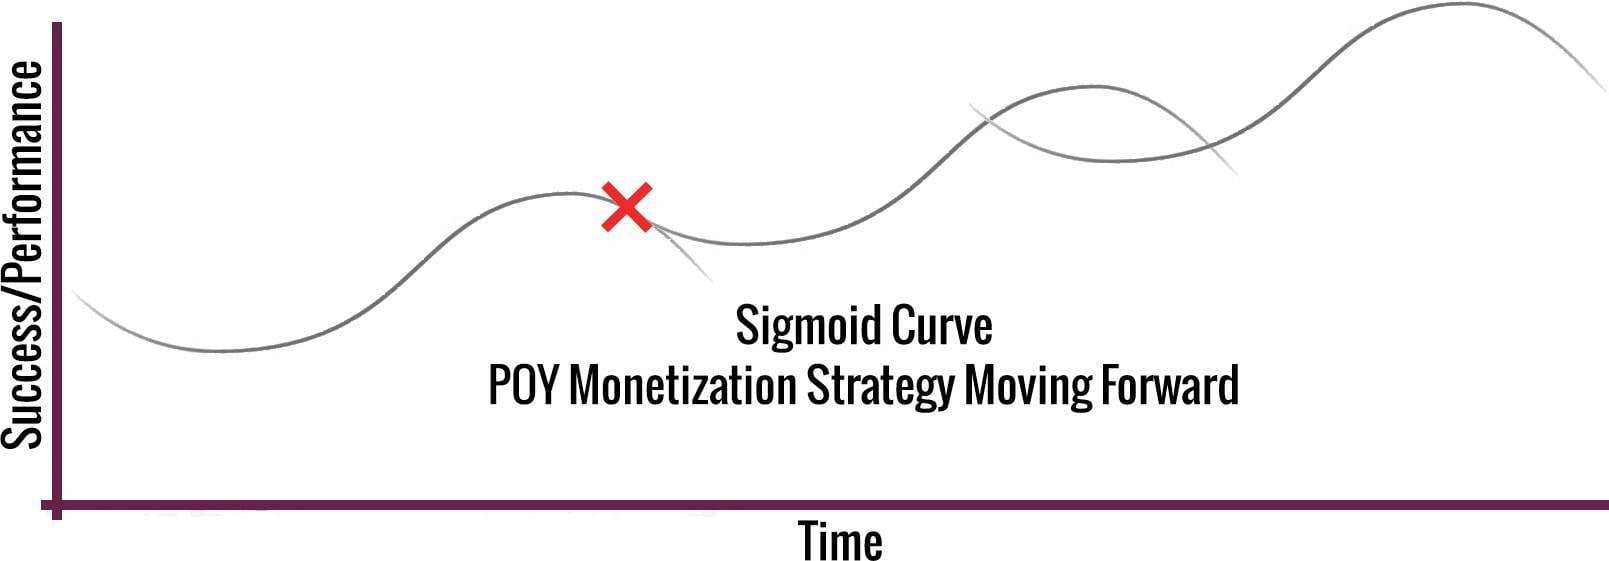 Sigmoid Curve Monetization Strategy Moving Forward.